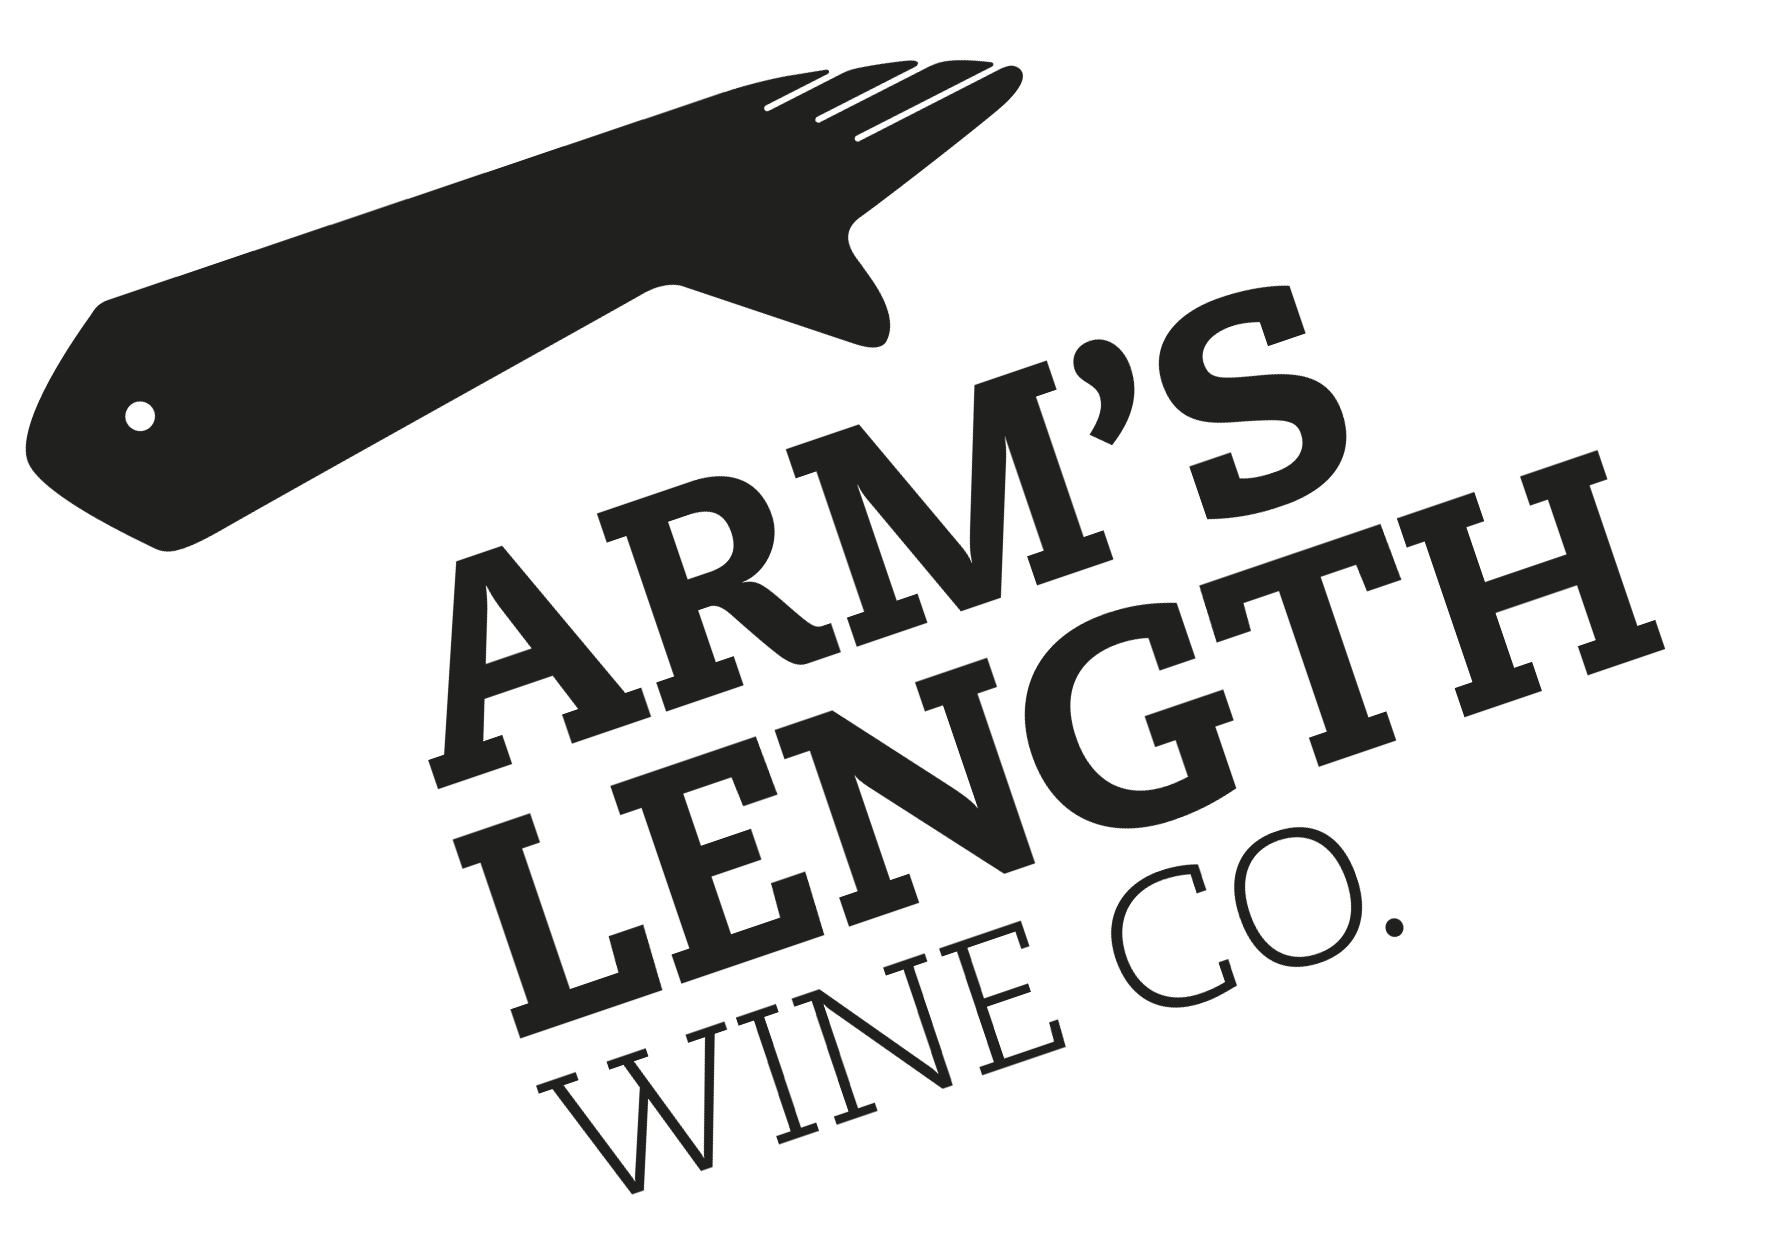 Arms Length Wine Co